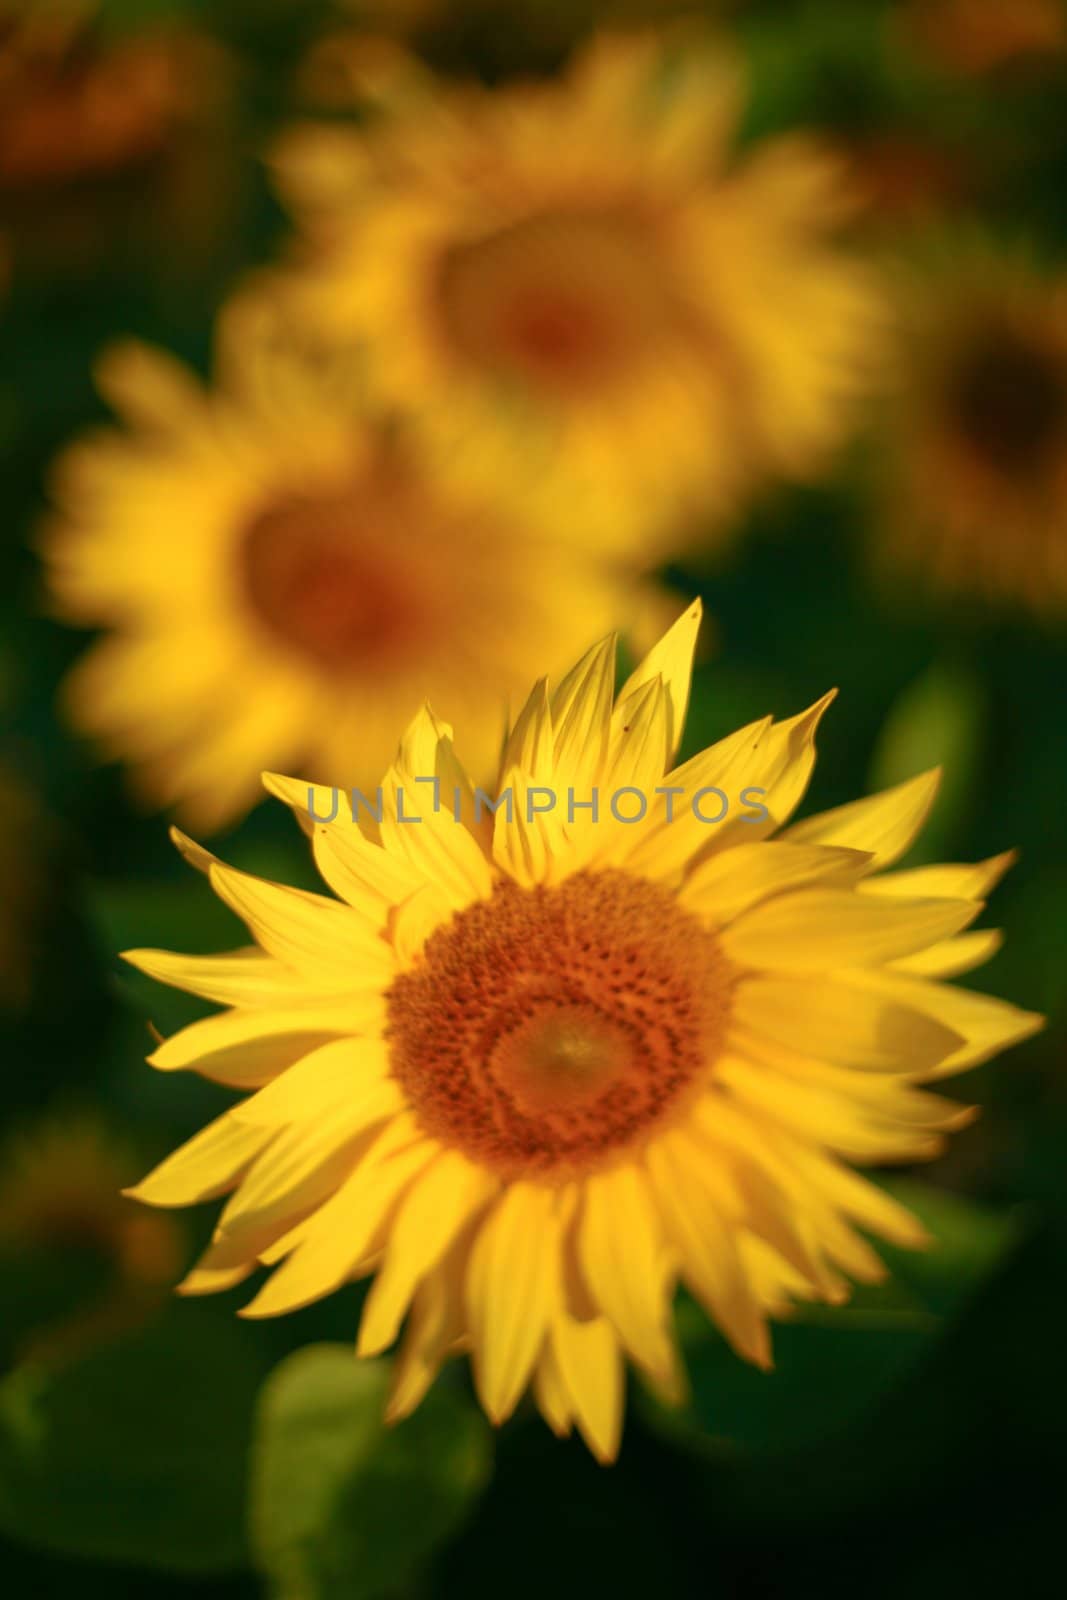 Yellow sunflowers by velkol